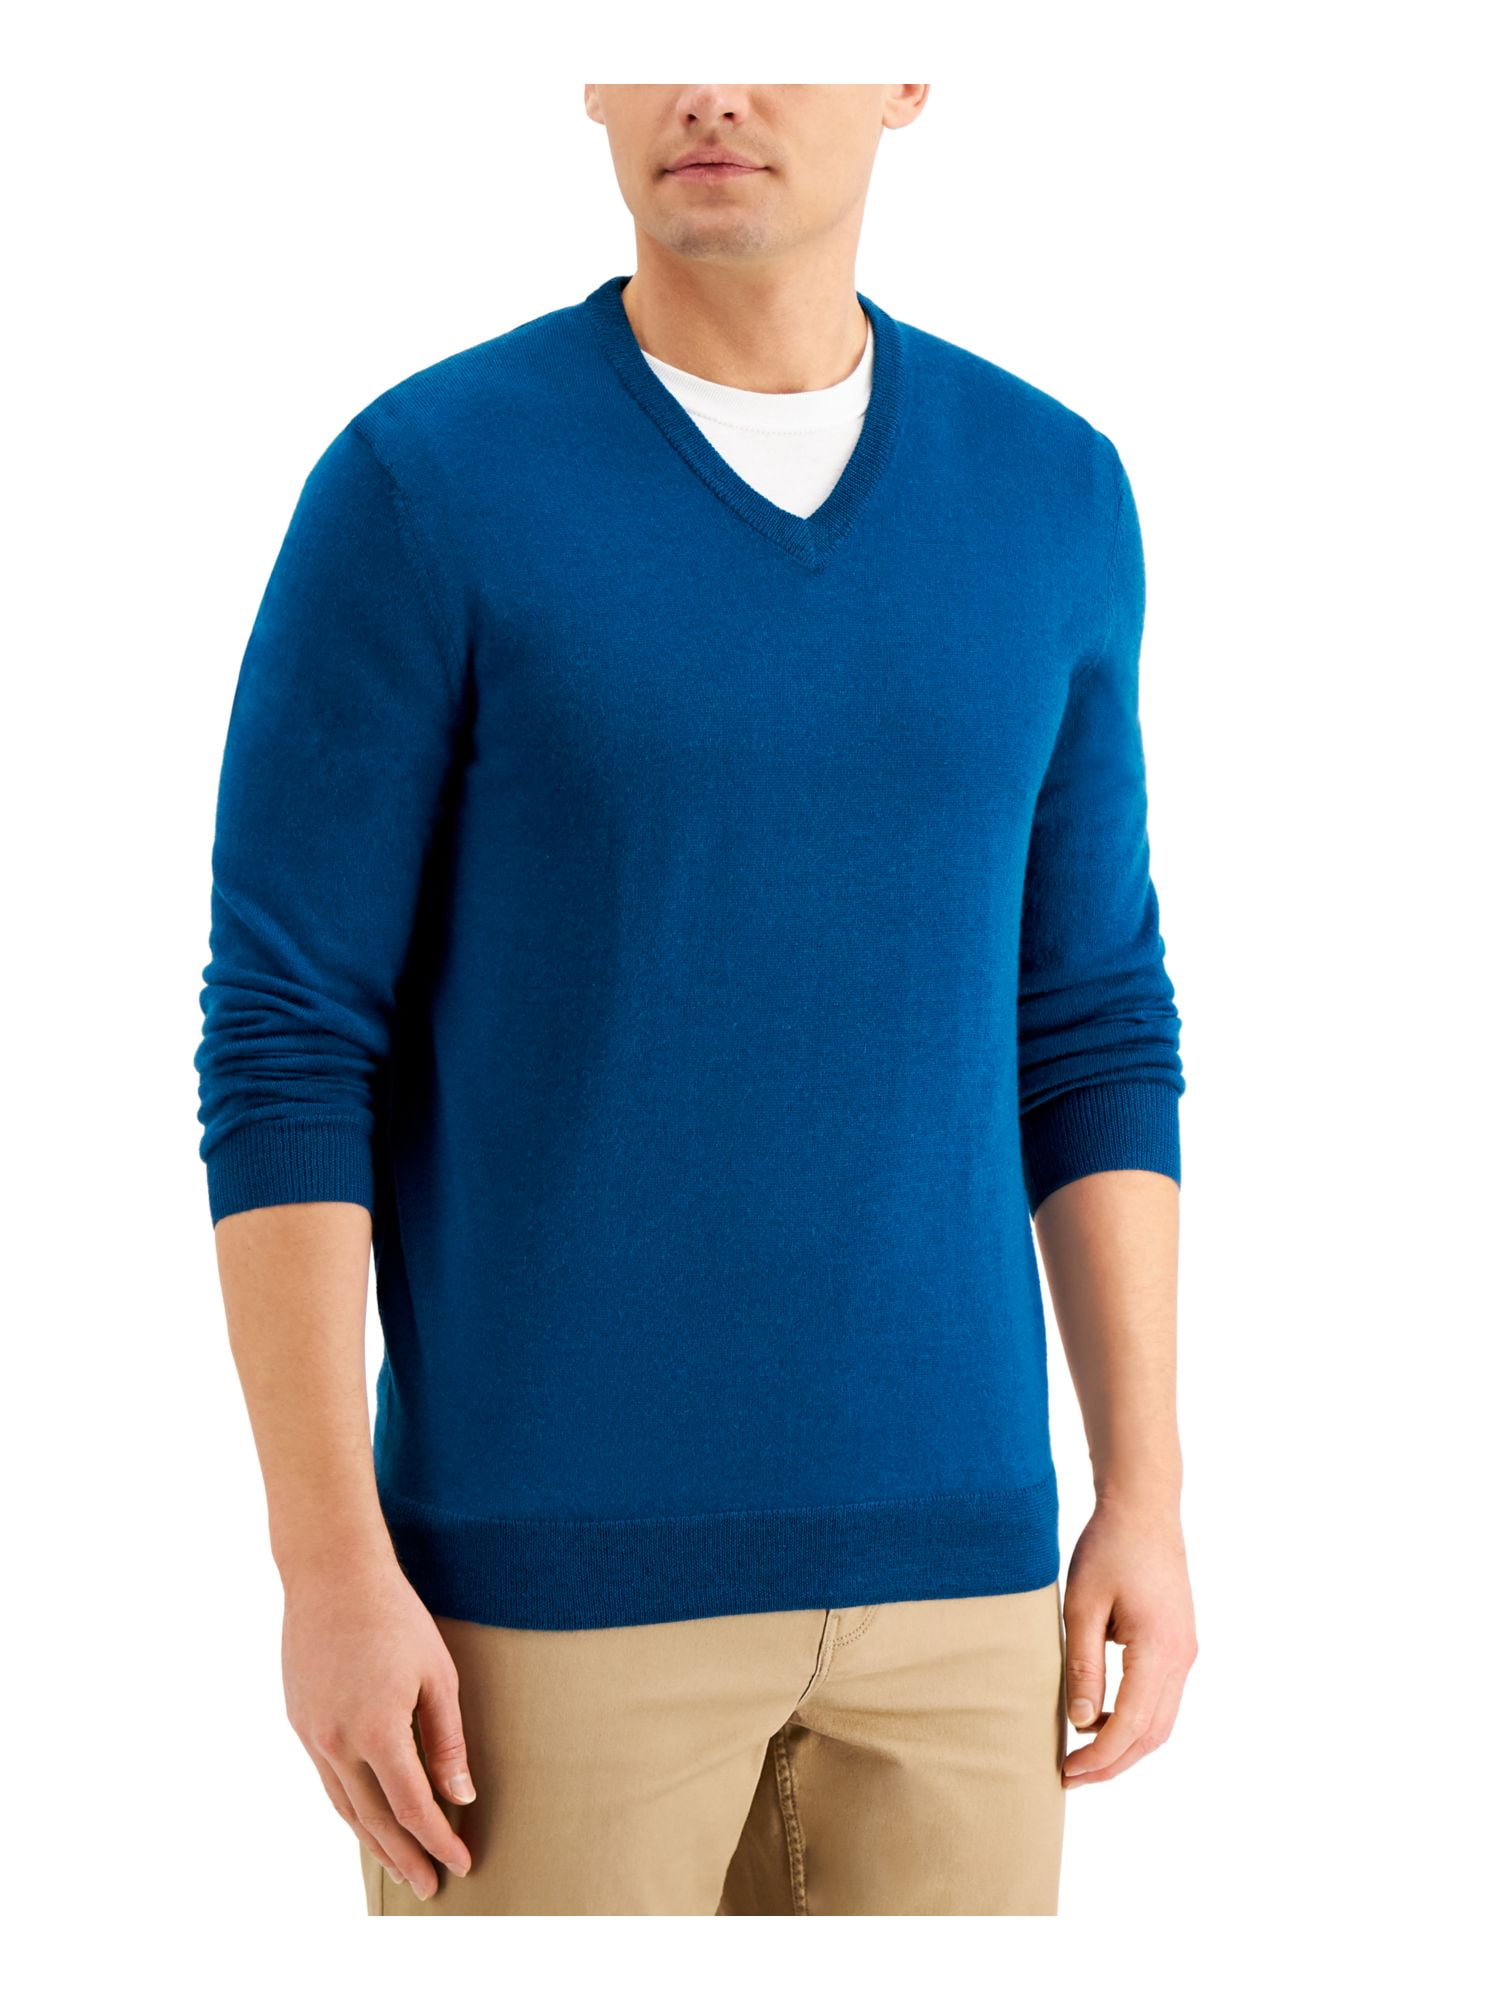 Details about   Club Room Burgundy Merino Wool Blend Long Sleeve V-Neck Sweater 3XB Big & Tall 